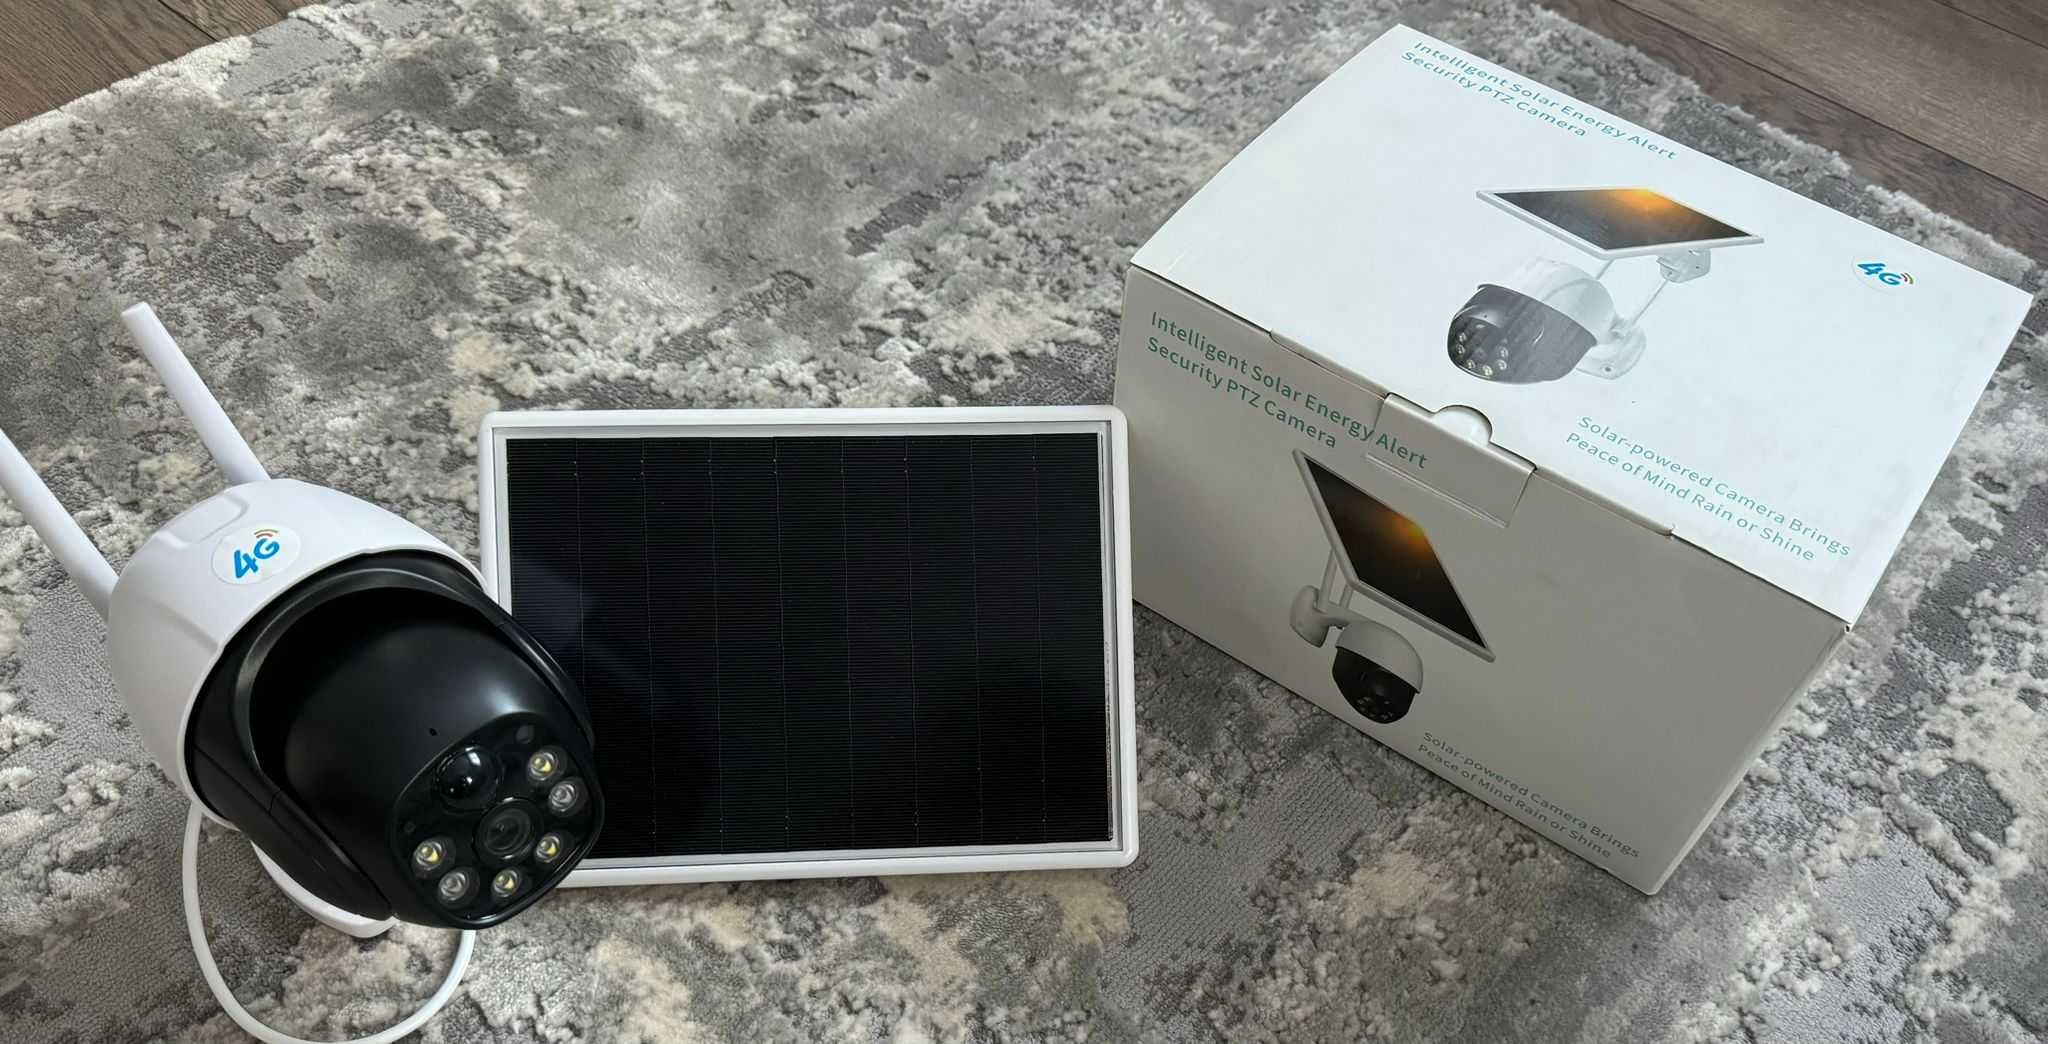 Camera de Supraveghere 4G cartela Sim cu Panou Solar, Full HD 1080p